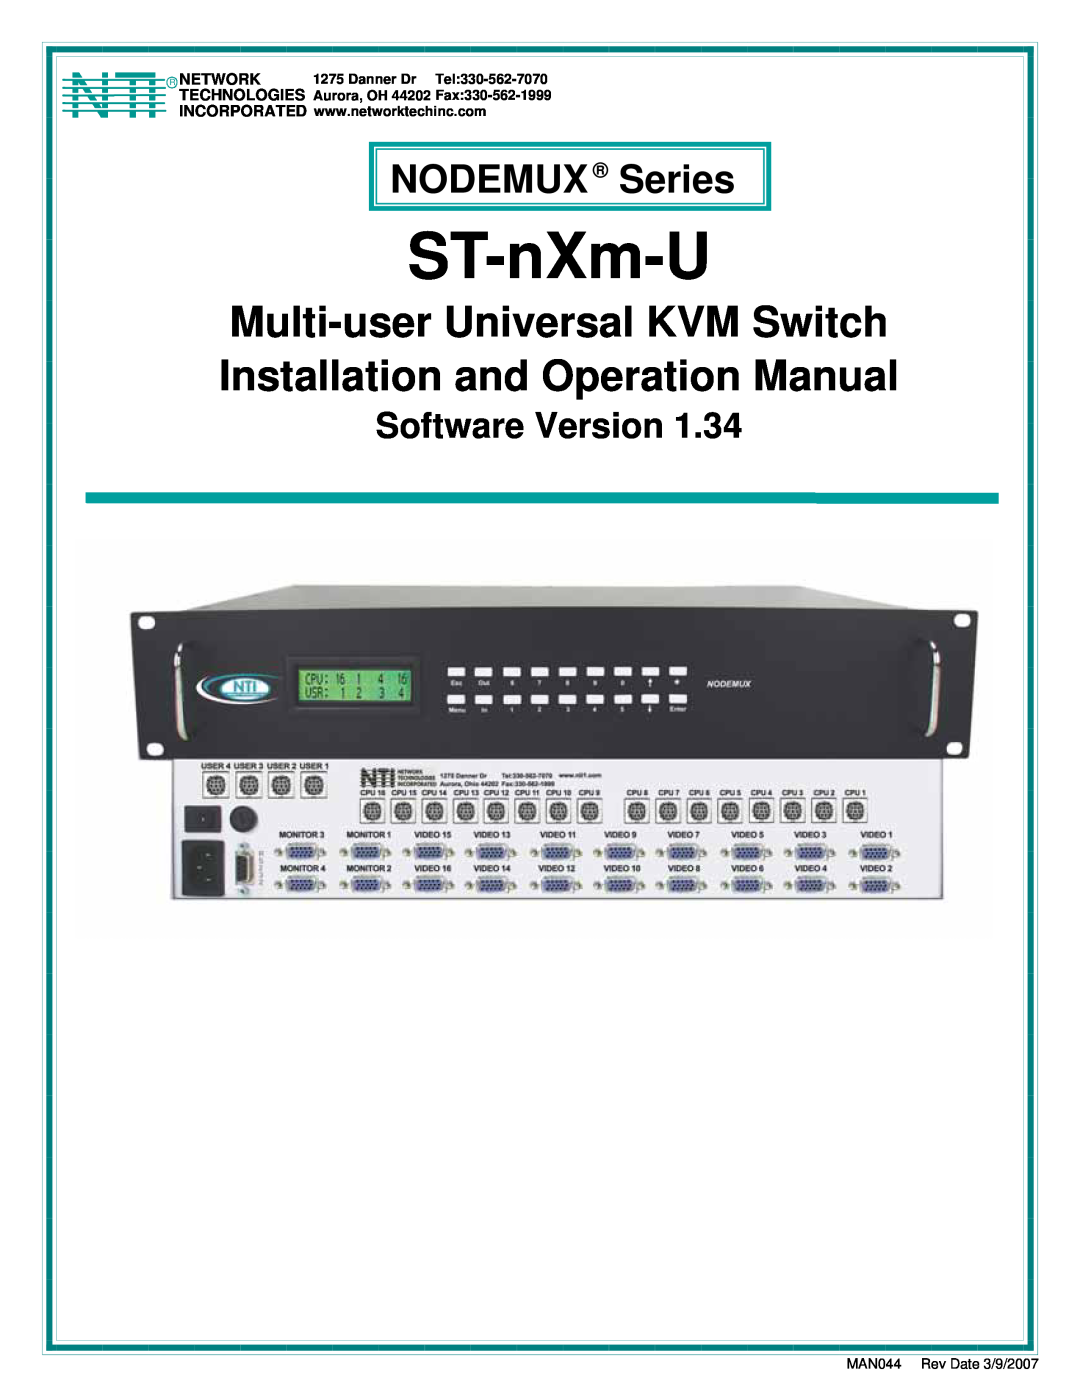 Network Technologies ST-nXm-U operation manual Multi-user Universal KVM Switch, Installation and Operation Manual 